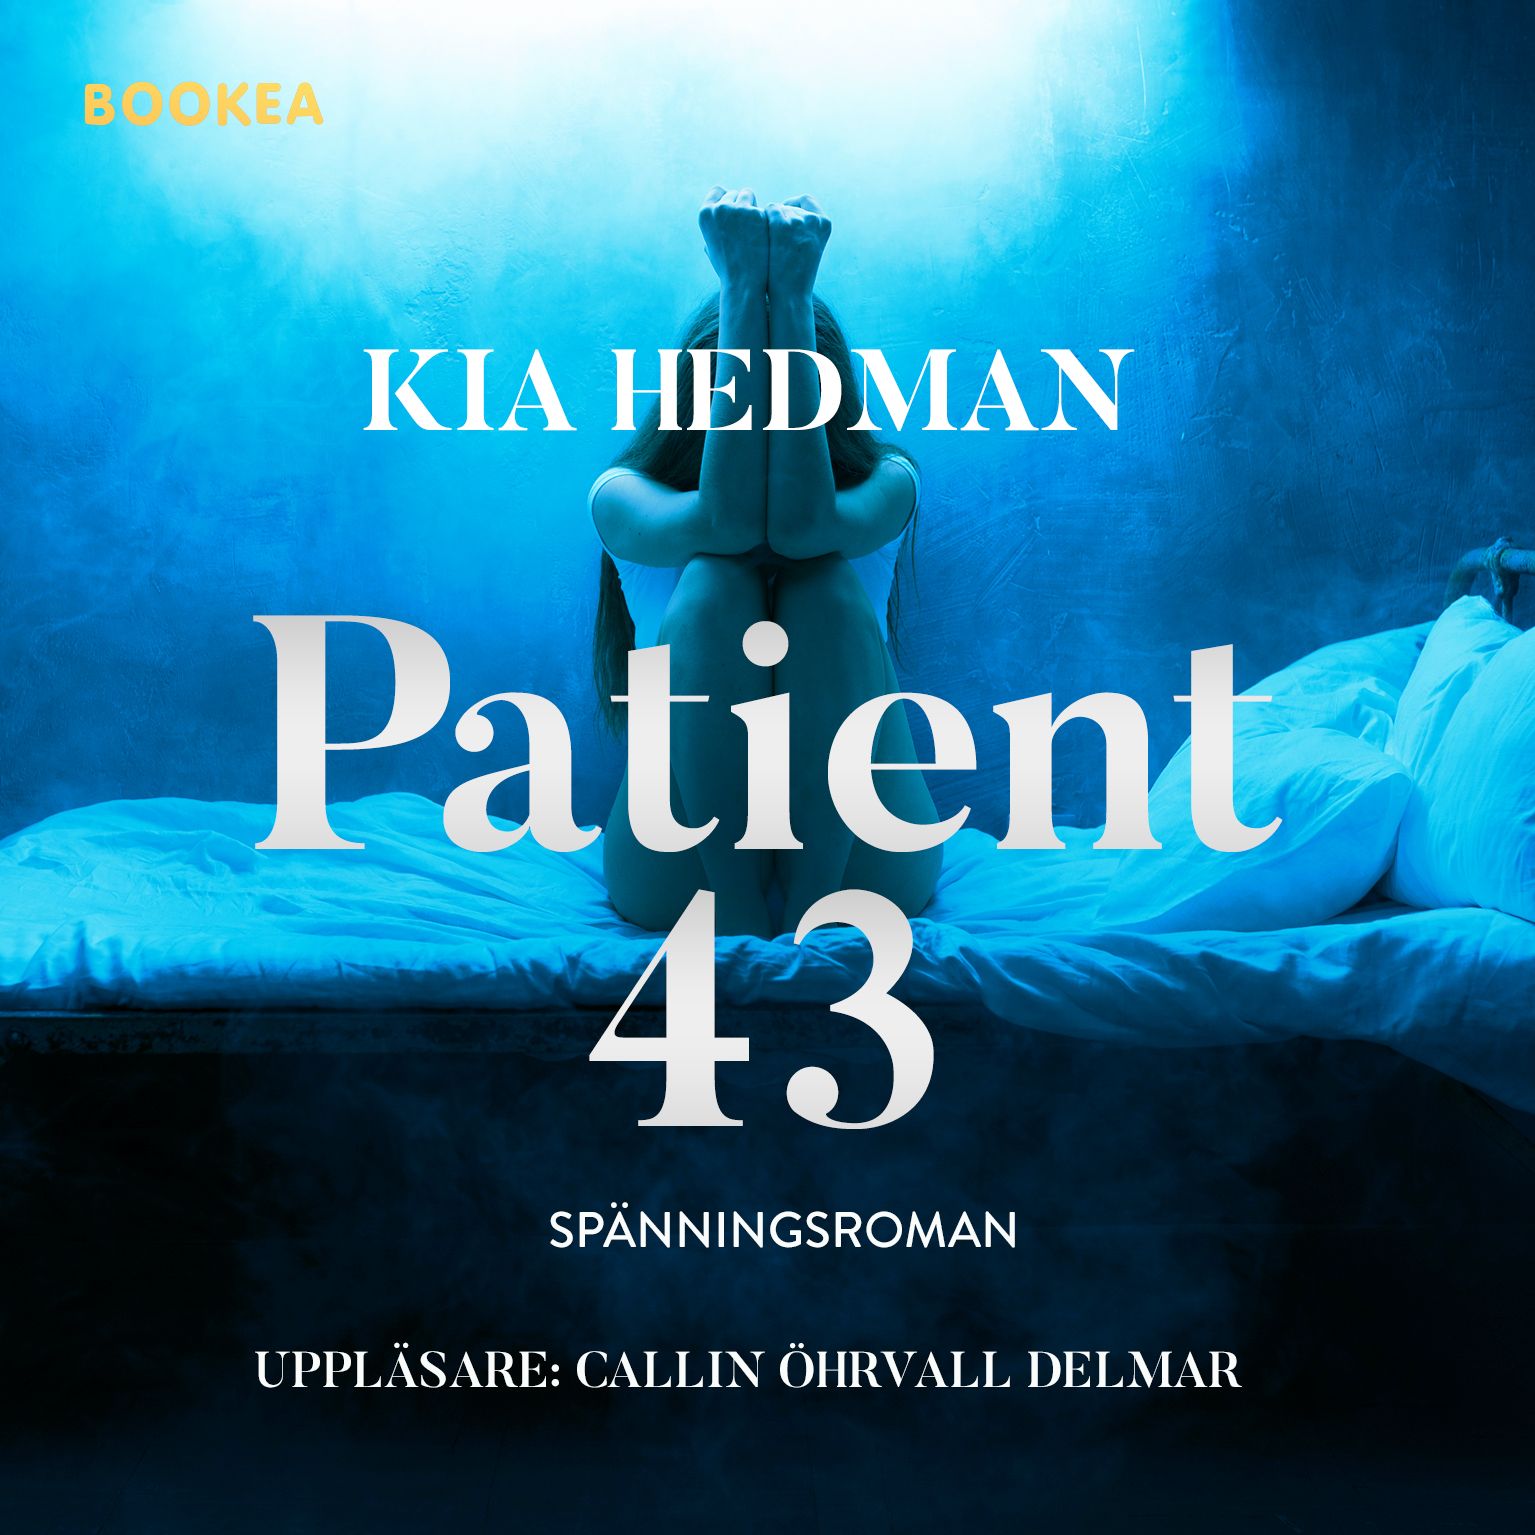 Patient 43, ljudbok av Kia Hedman